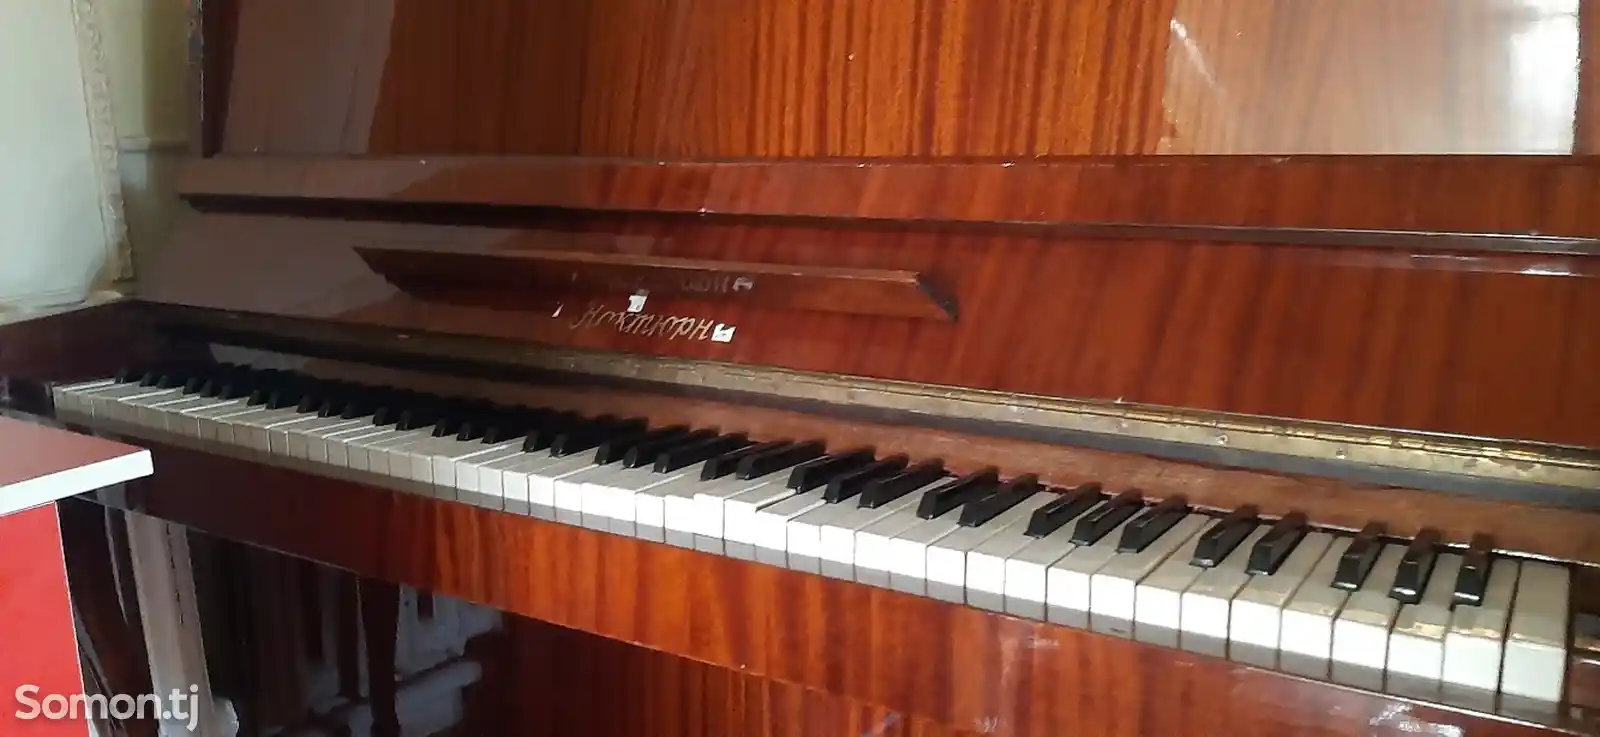 Пианино ноткюрн-3